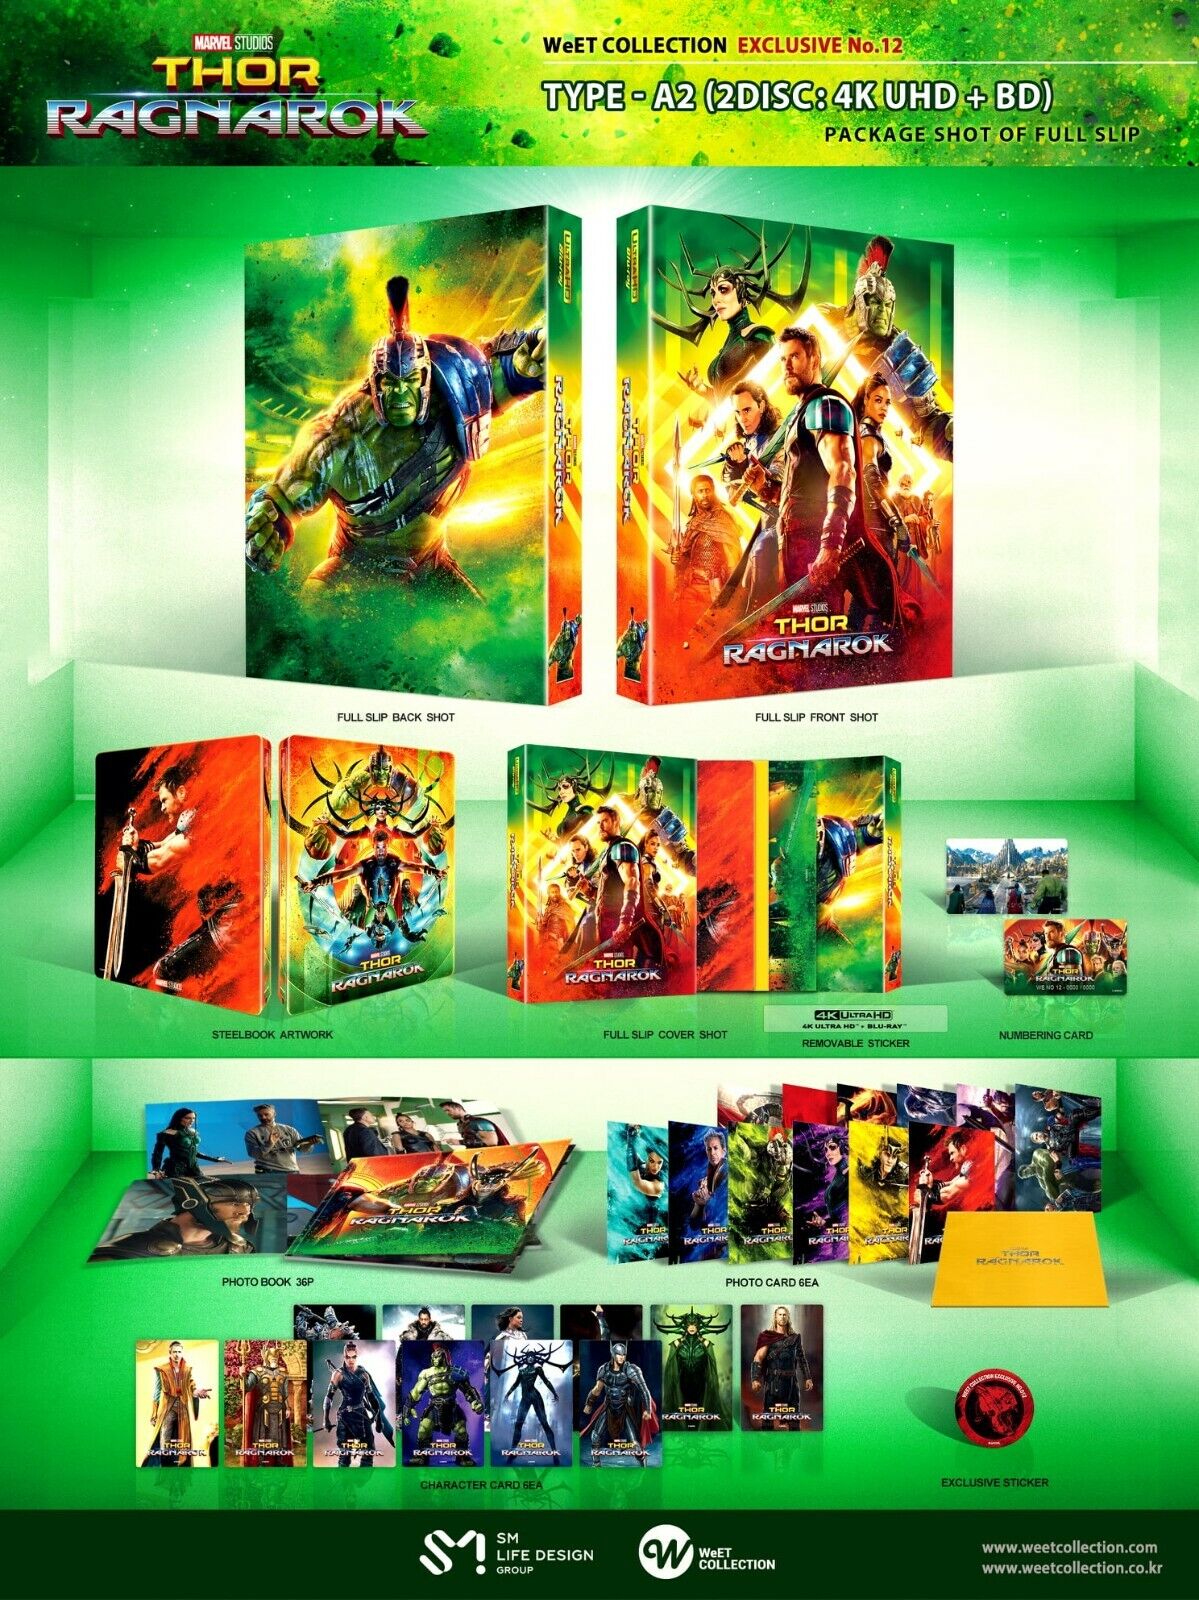 Thor: Ragnarok 4K+3D+2D Blu-ray Steelbook WeET Collection Exclusive #1